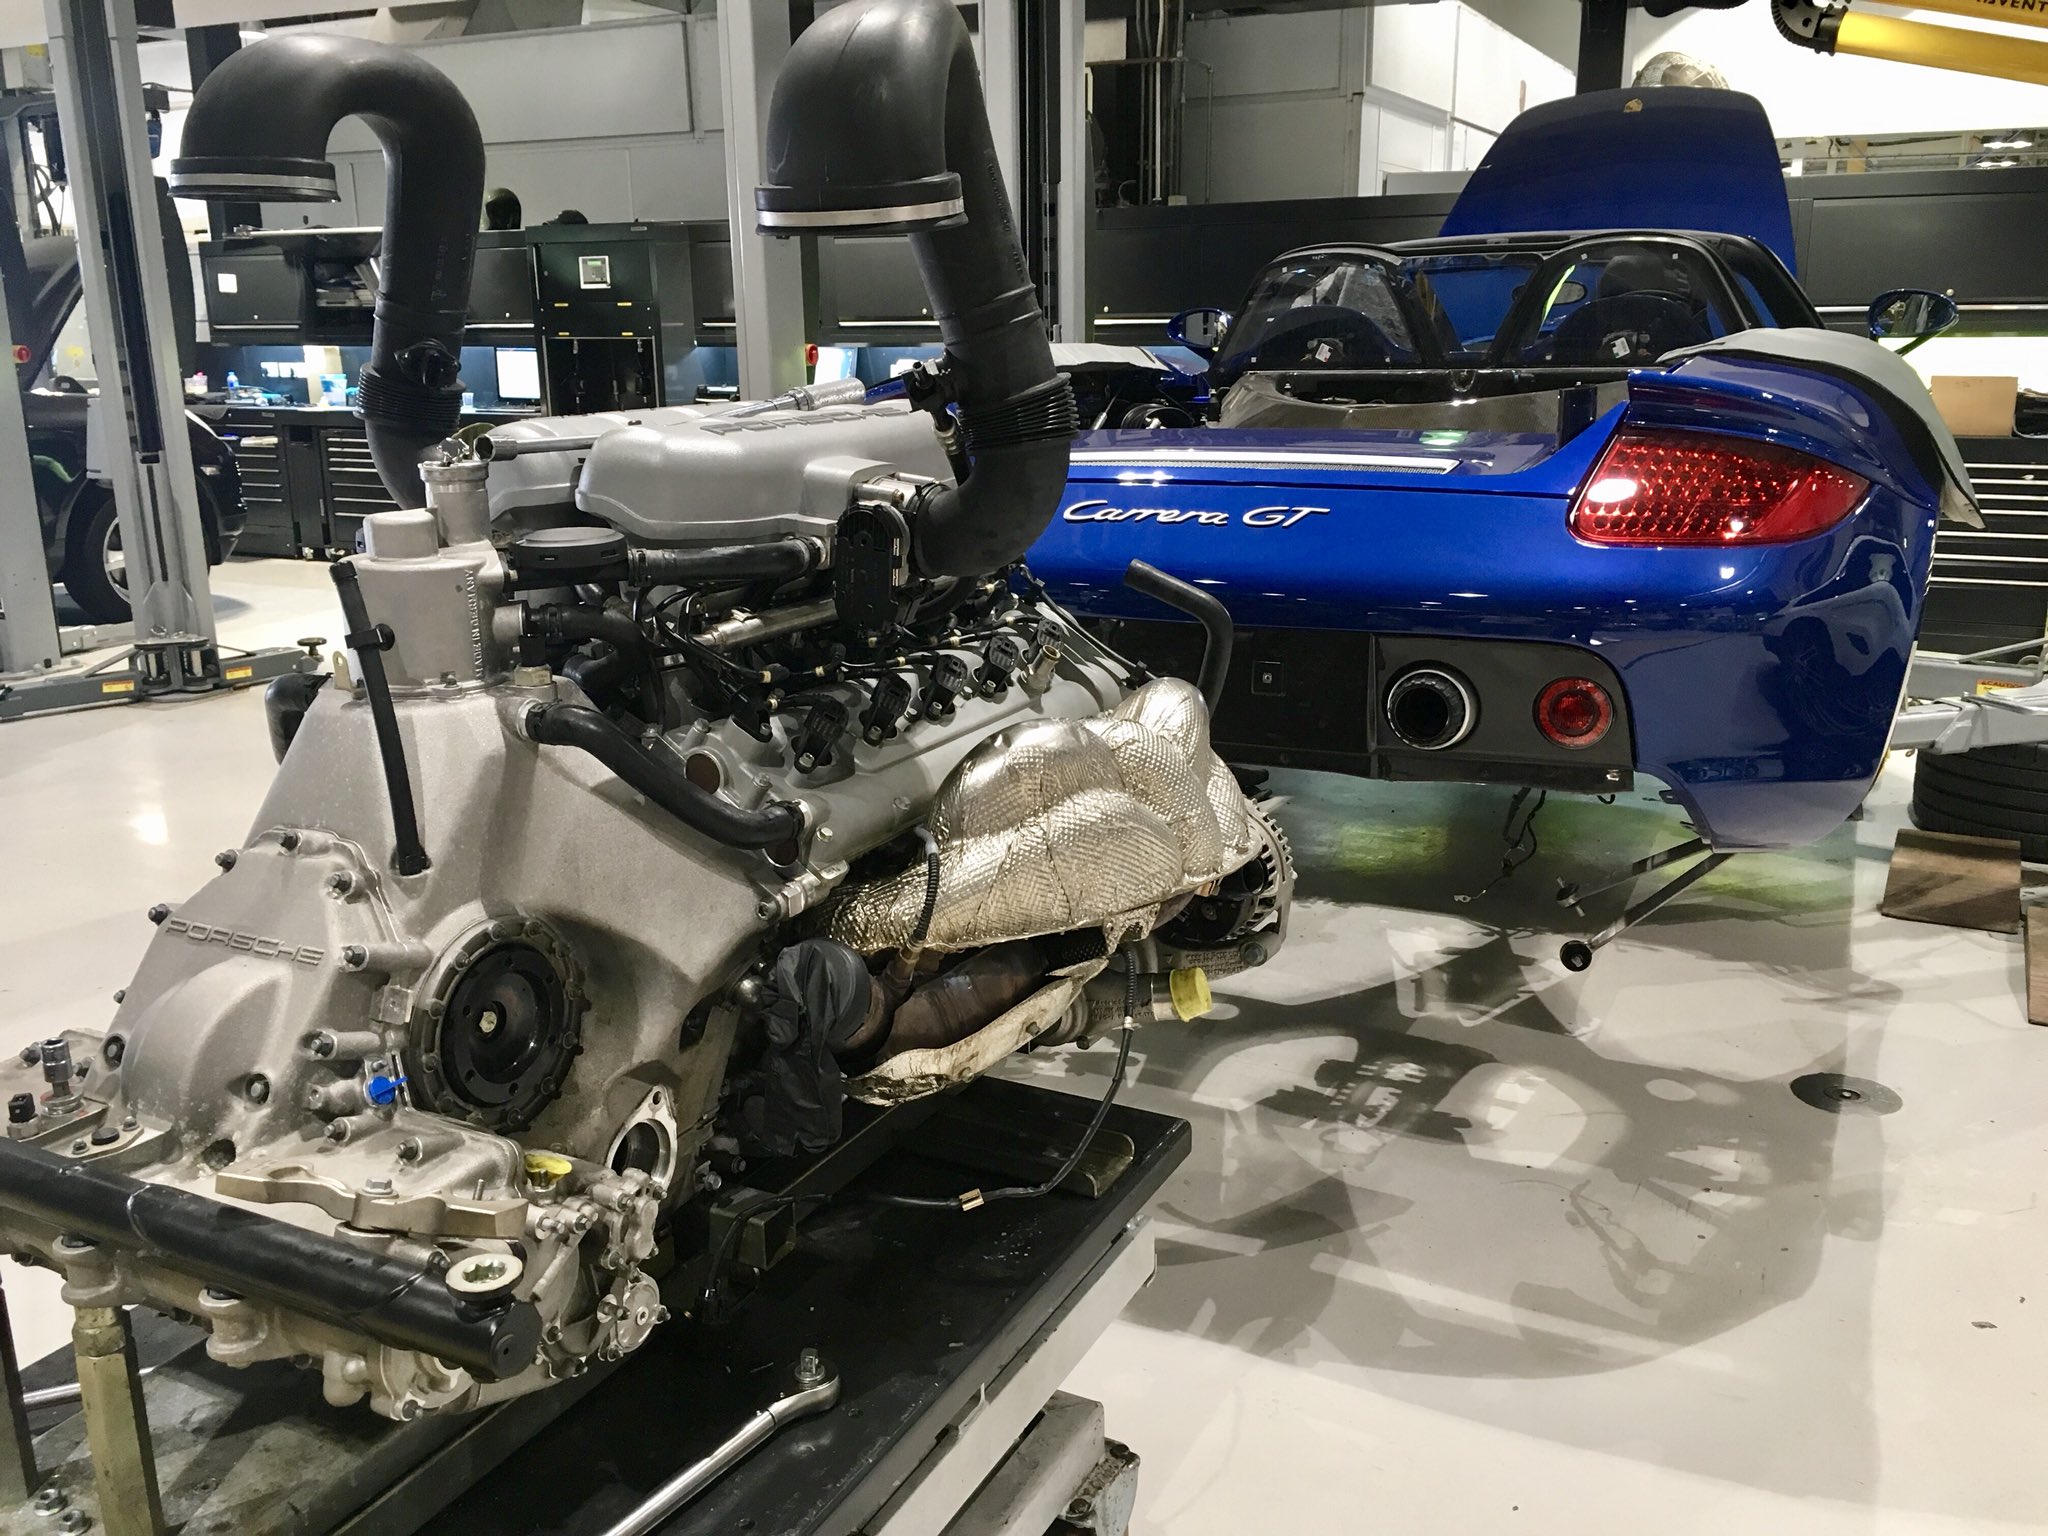 Learn why expert mechanics recommend the Porsche Carrera GT Service